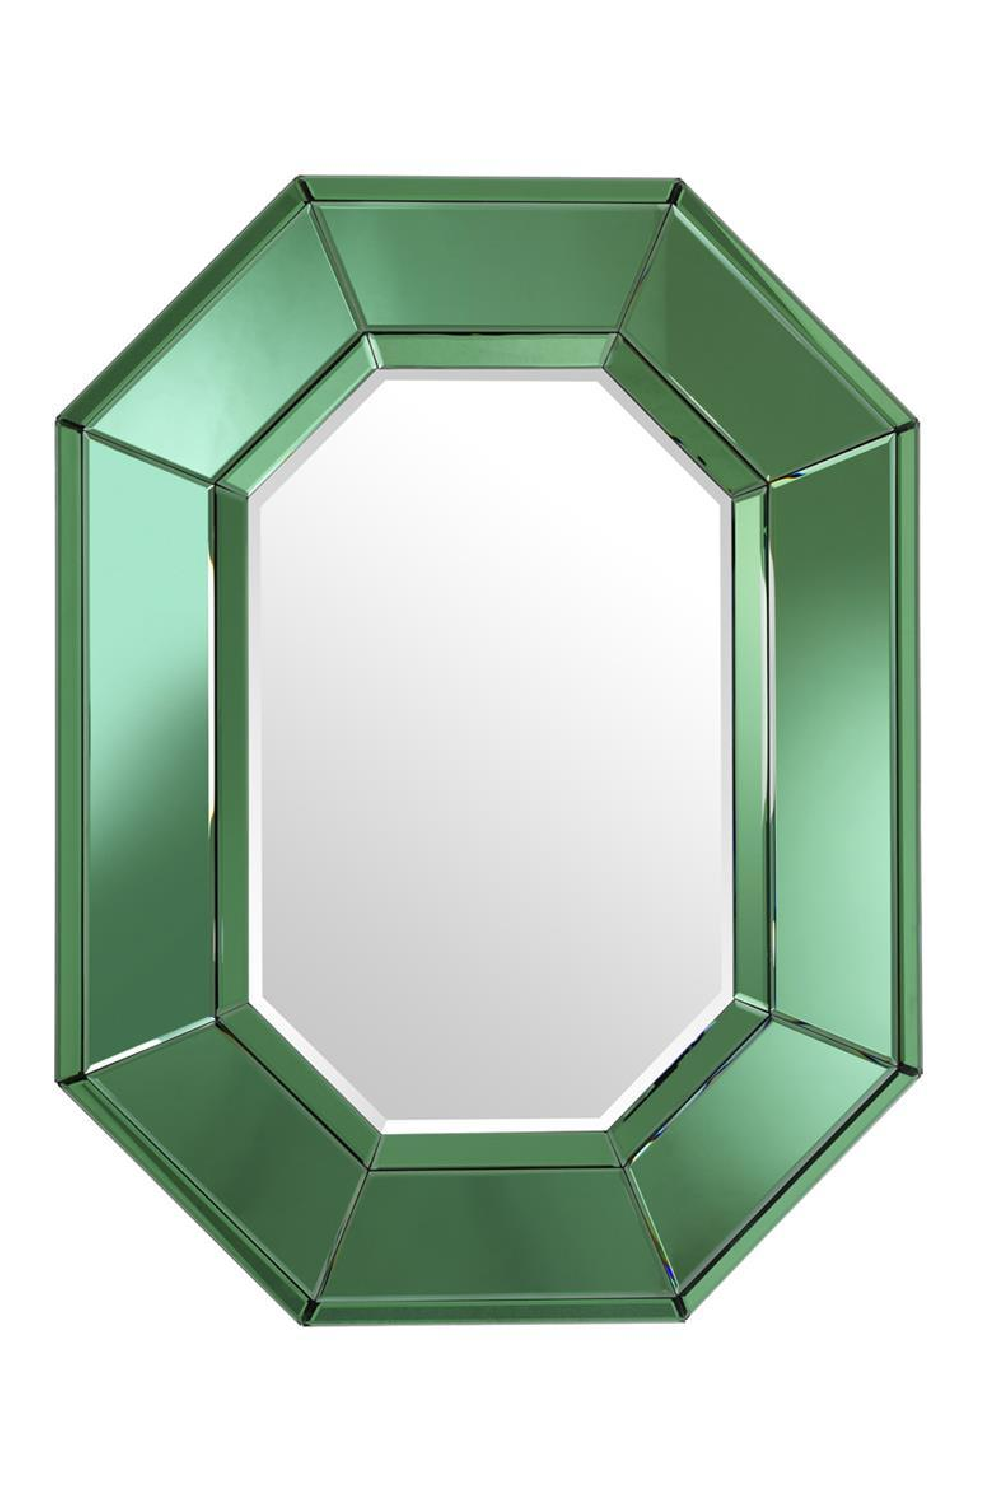 Eichholtz Mirror Le Sereno Green Mirror Glass